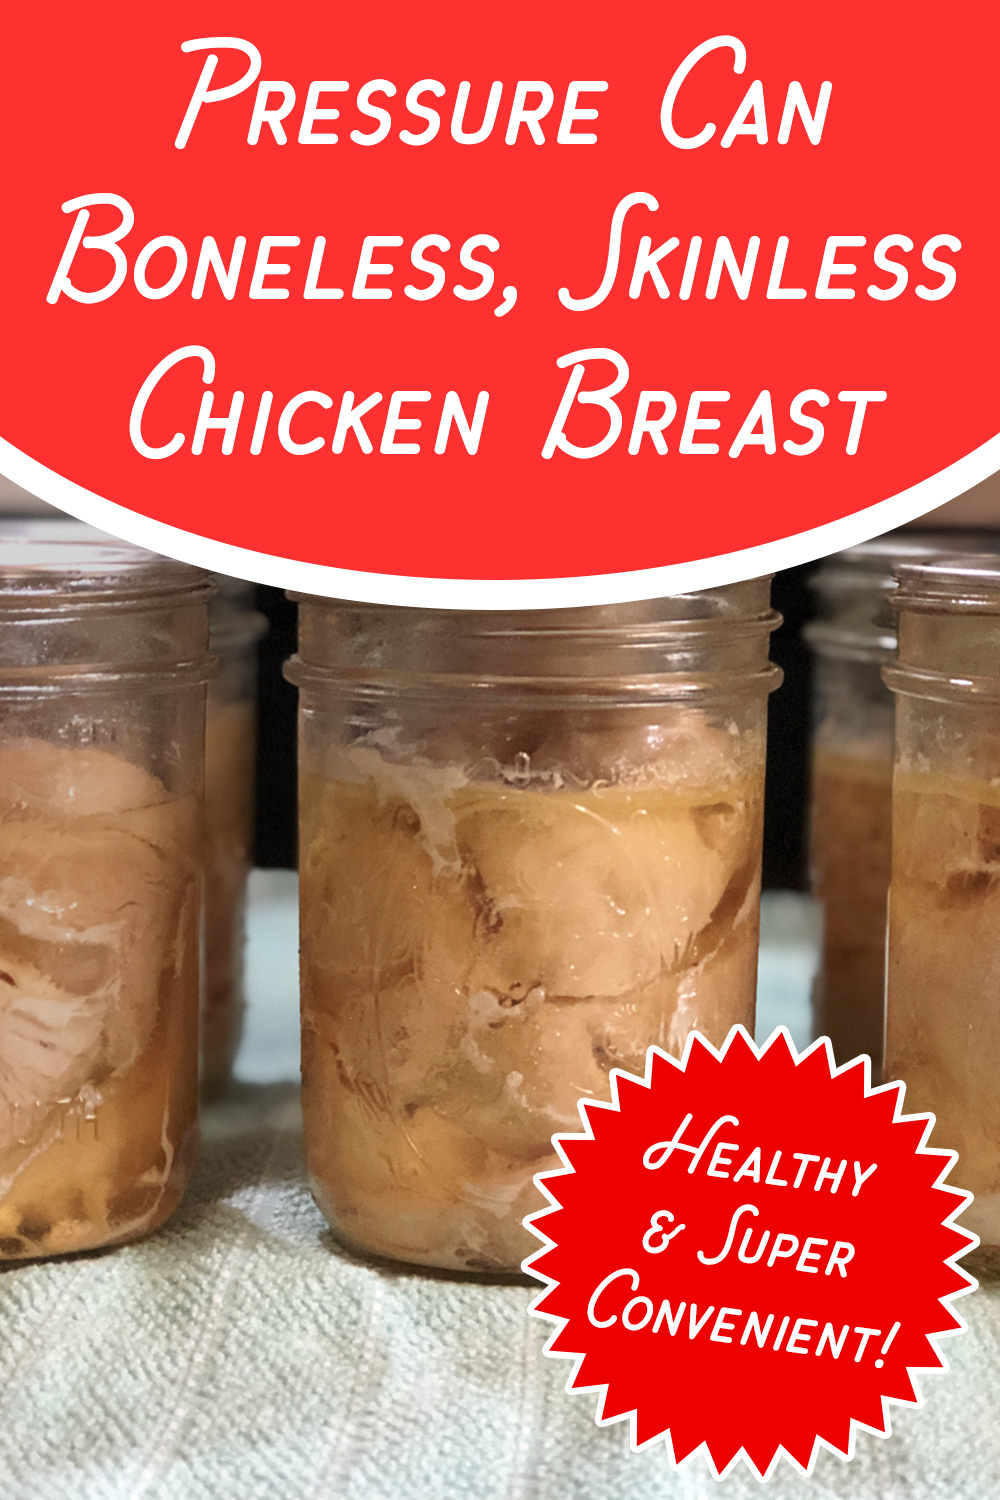 Pressure can boneless, skinless chicken breast